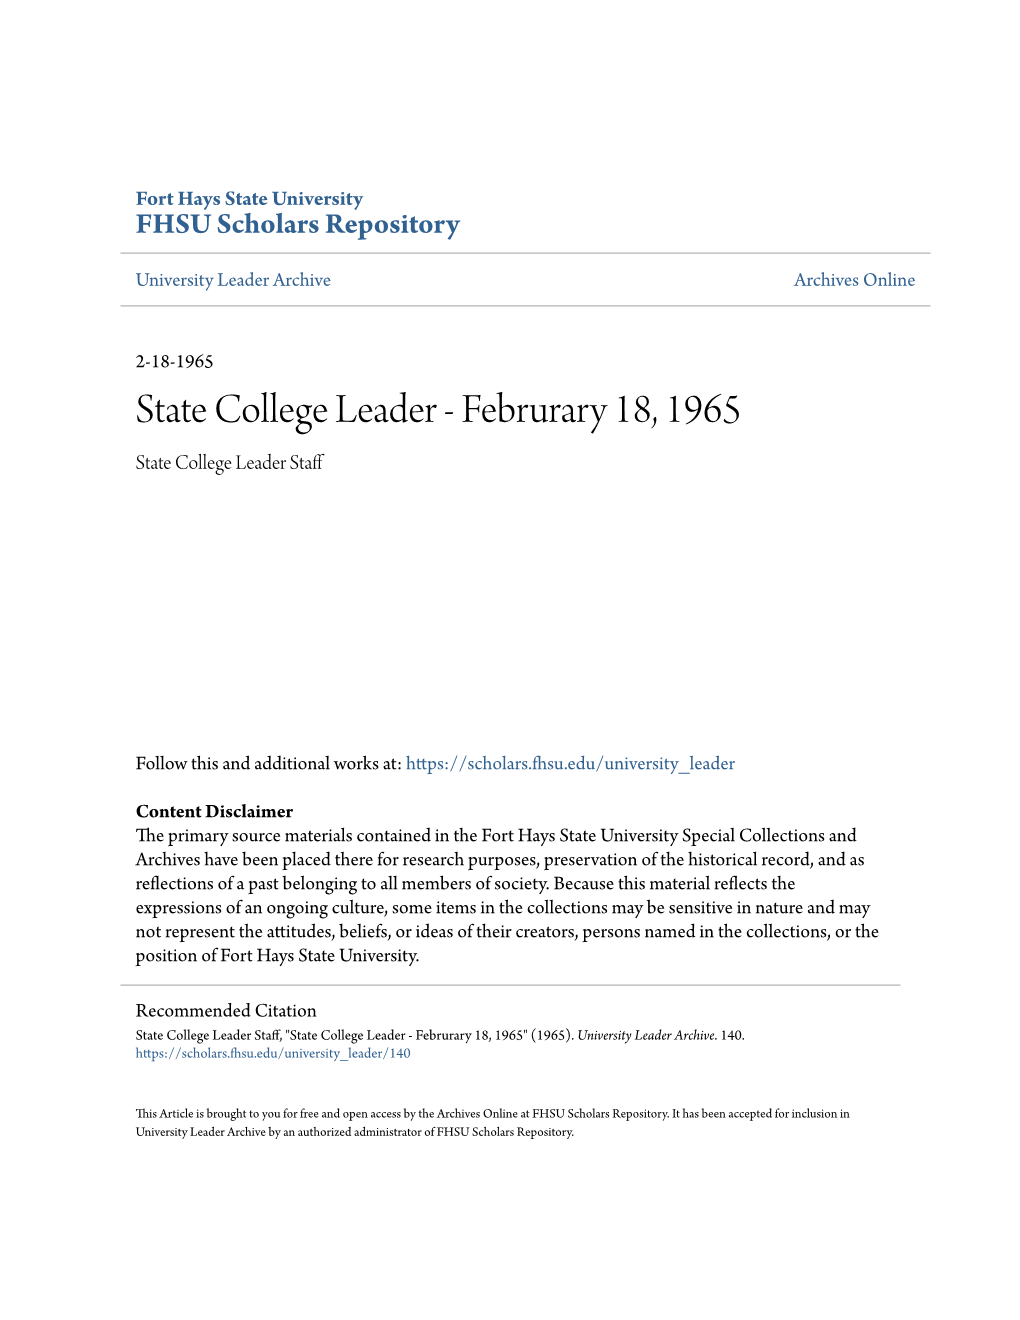 Februrary 18, 1965 State College Leader Staff